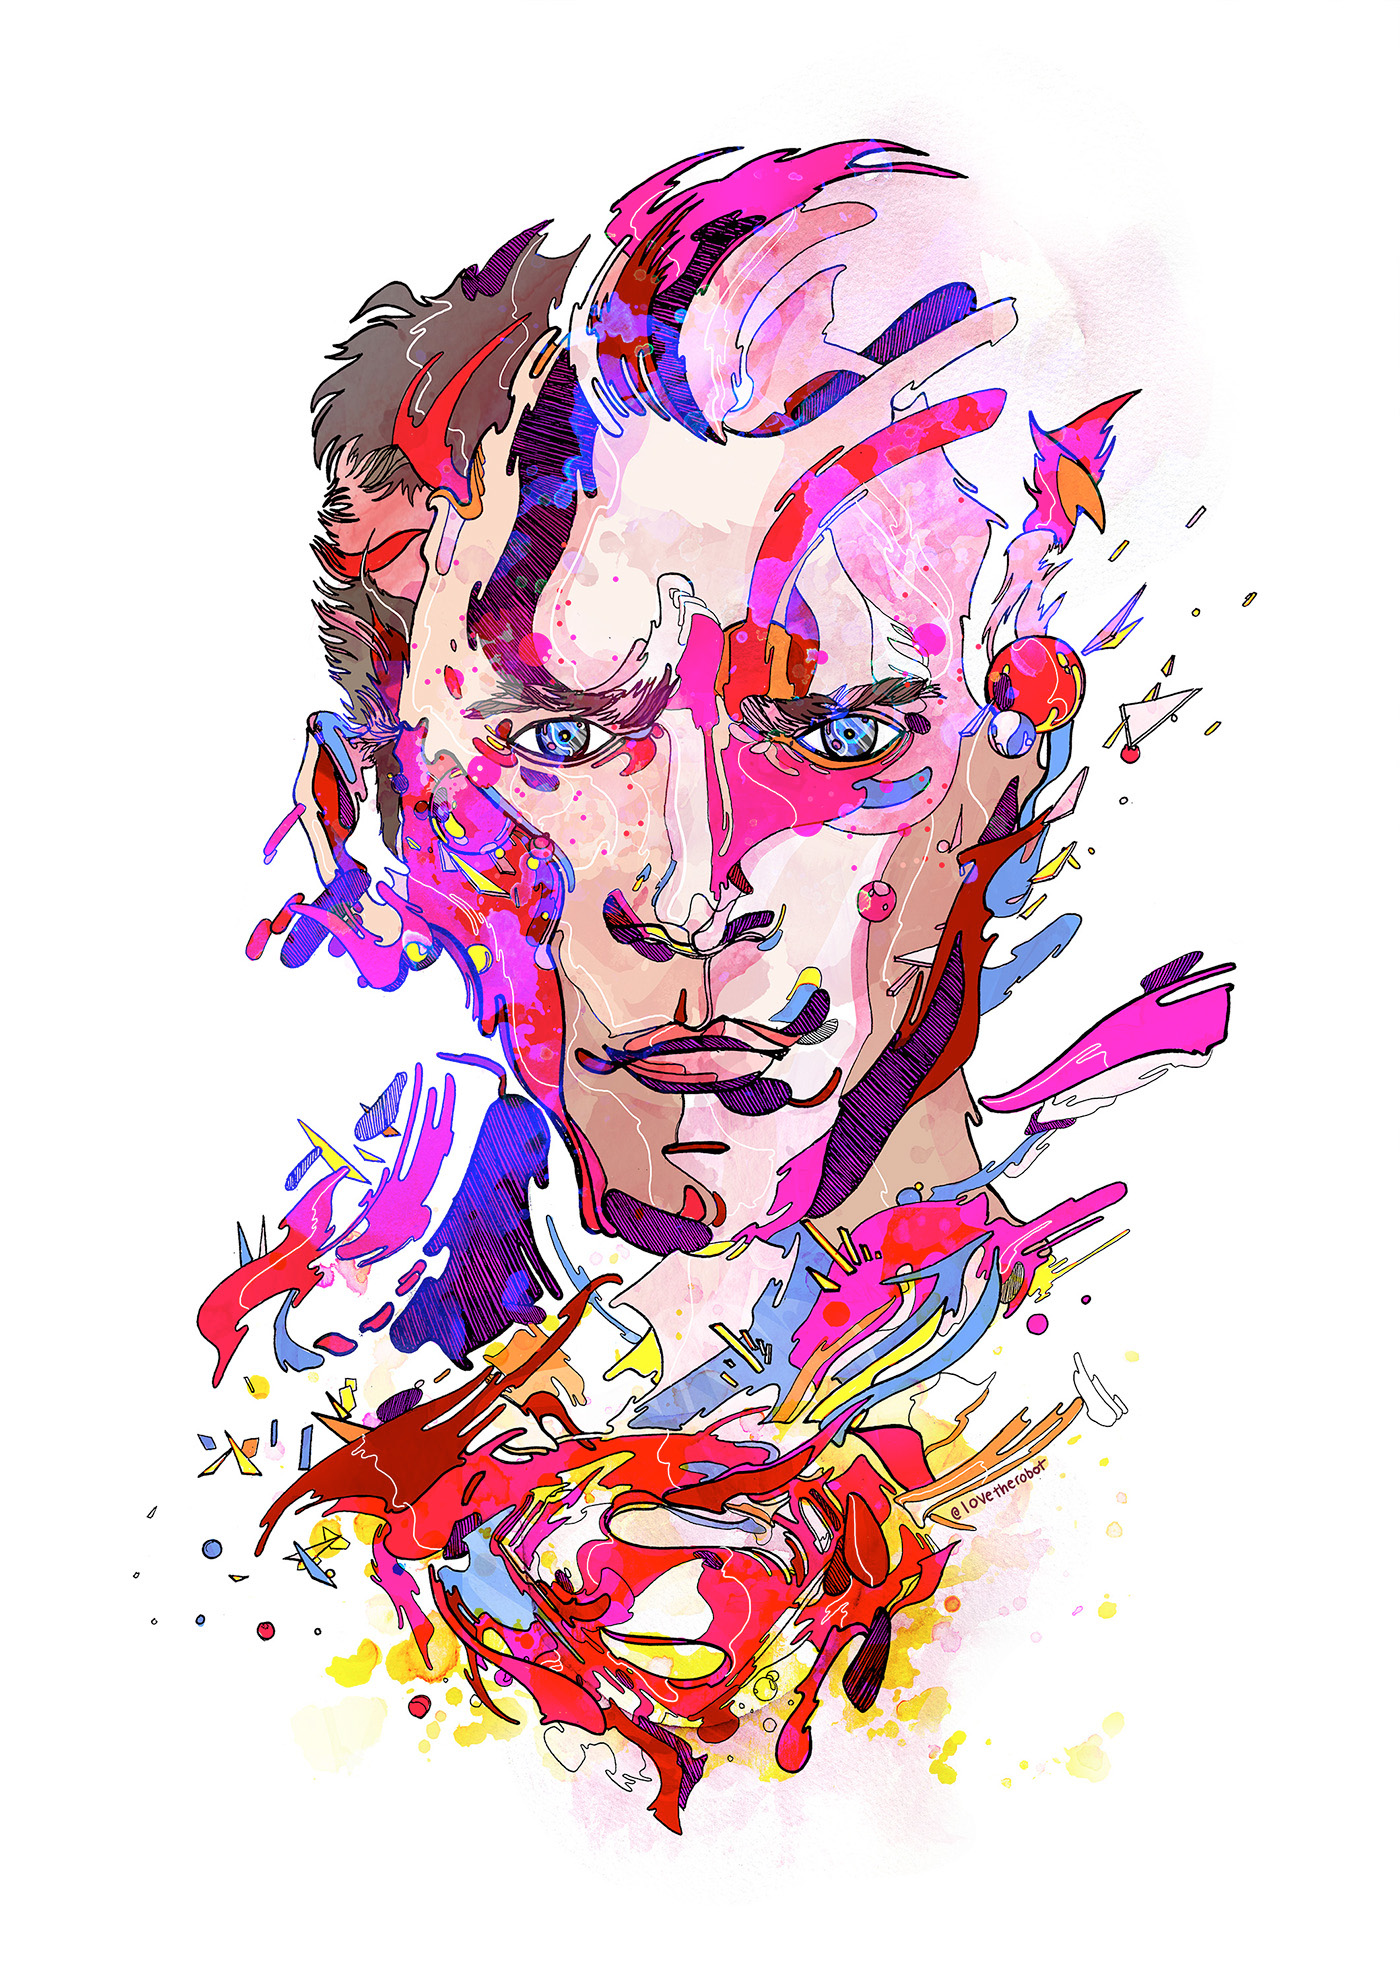 Adobe Portfolio marvel captain america Civil War superman joker Dc Comics star wars kylo ren dc marvel